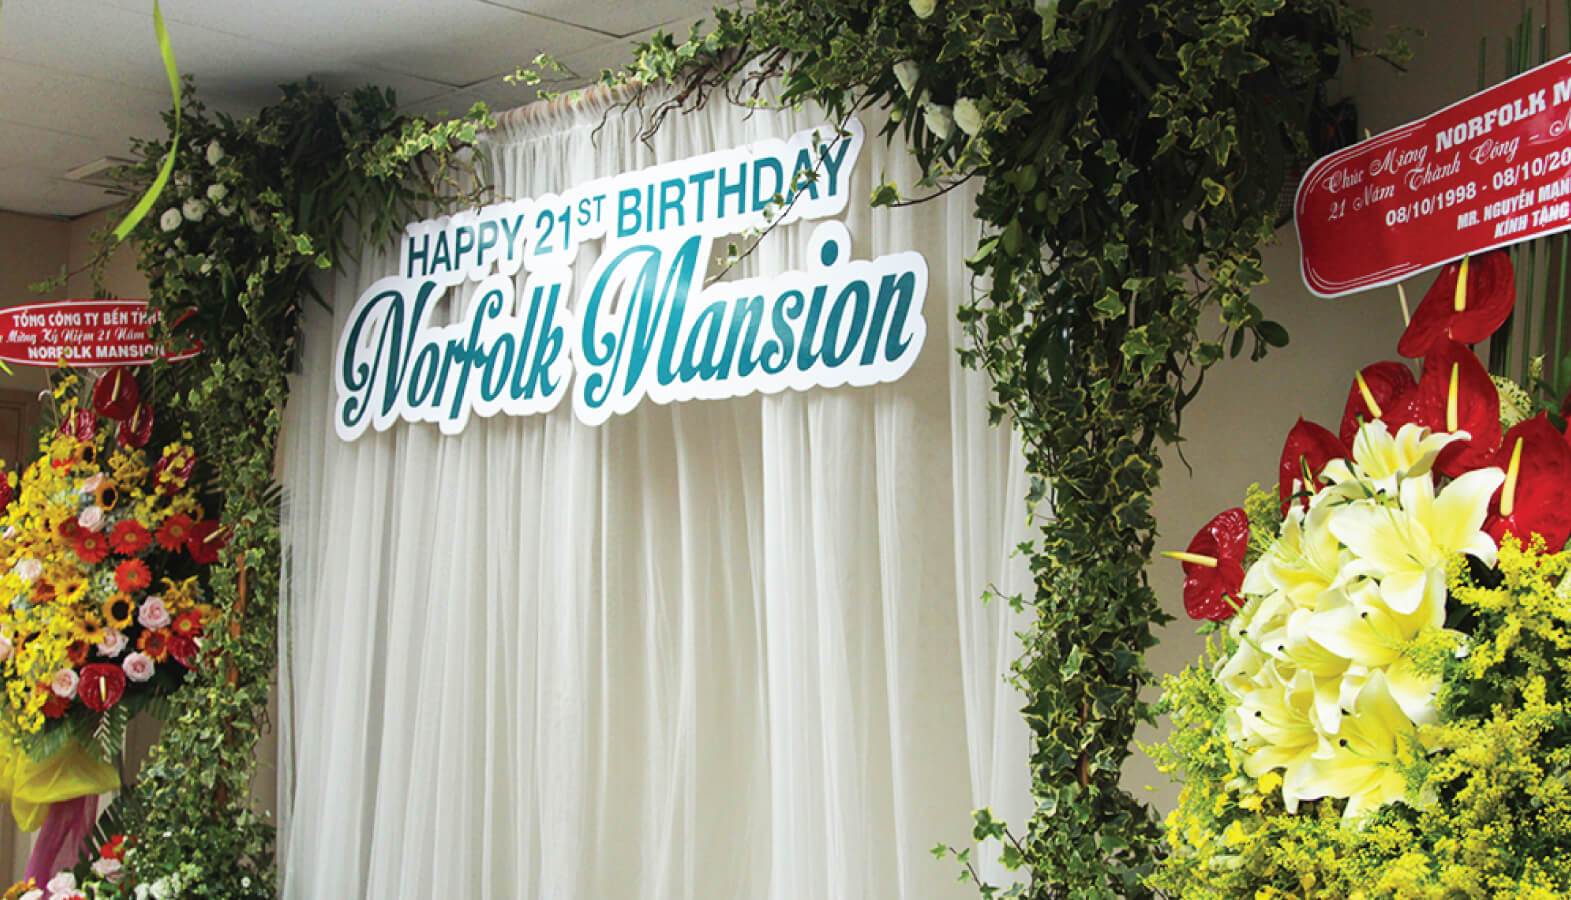 Norfolk Mansion Celebrates the 21st Anniversary